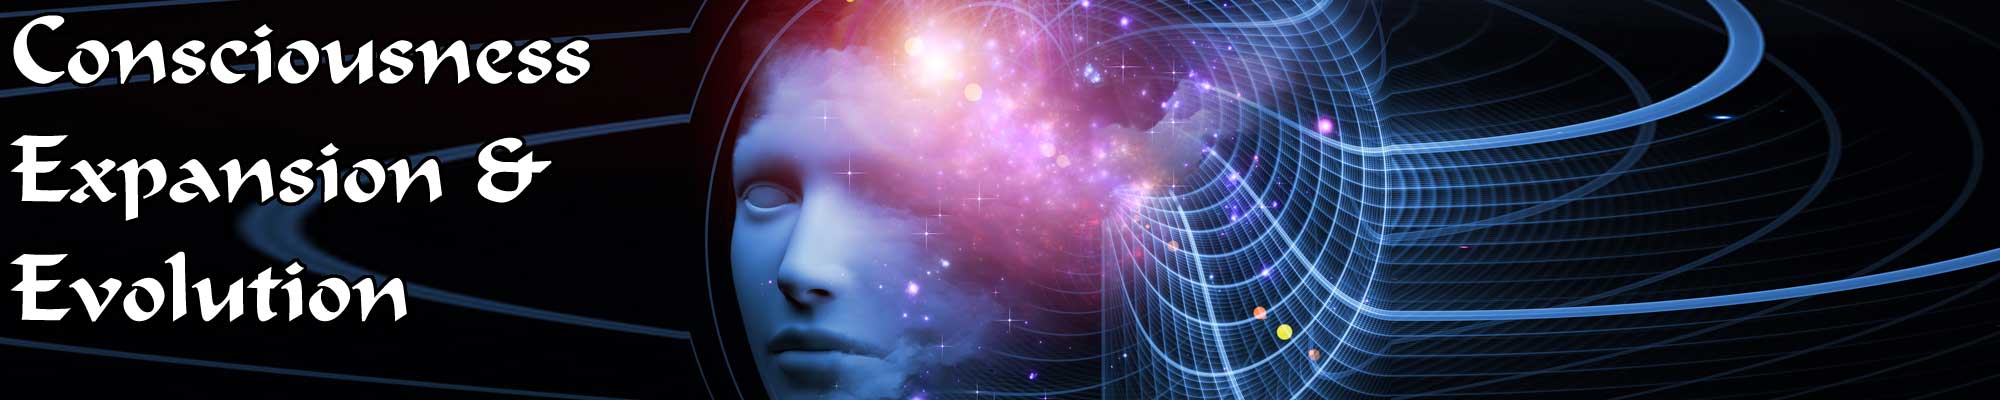 Consciousness Expansion + Evolution image